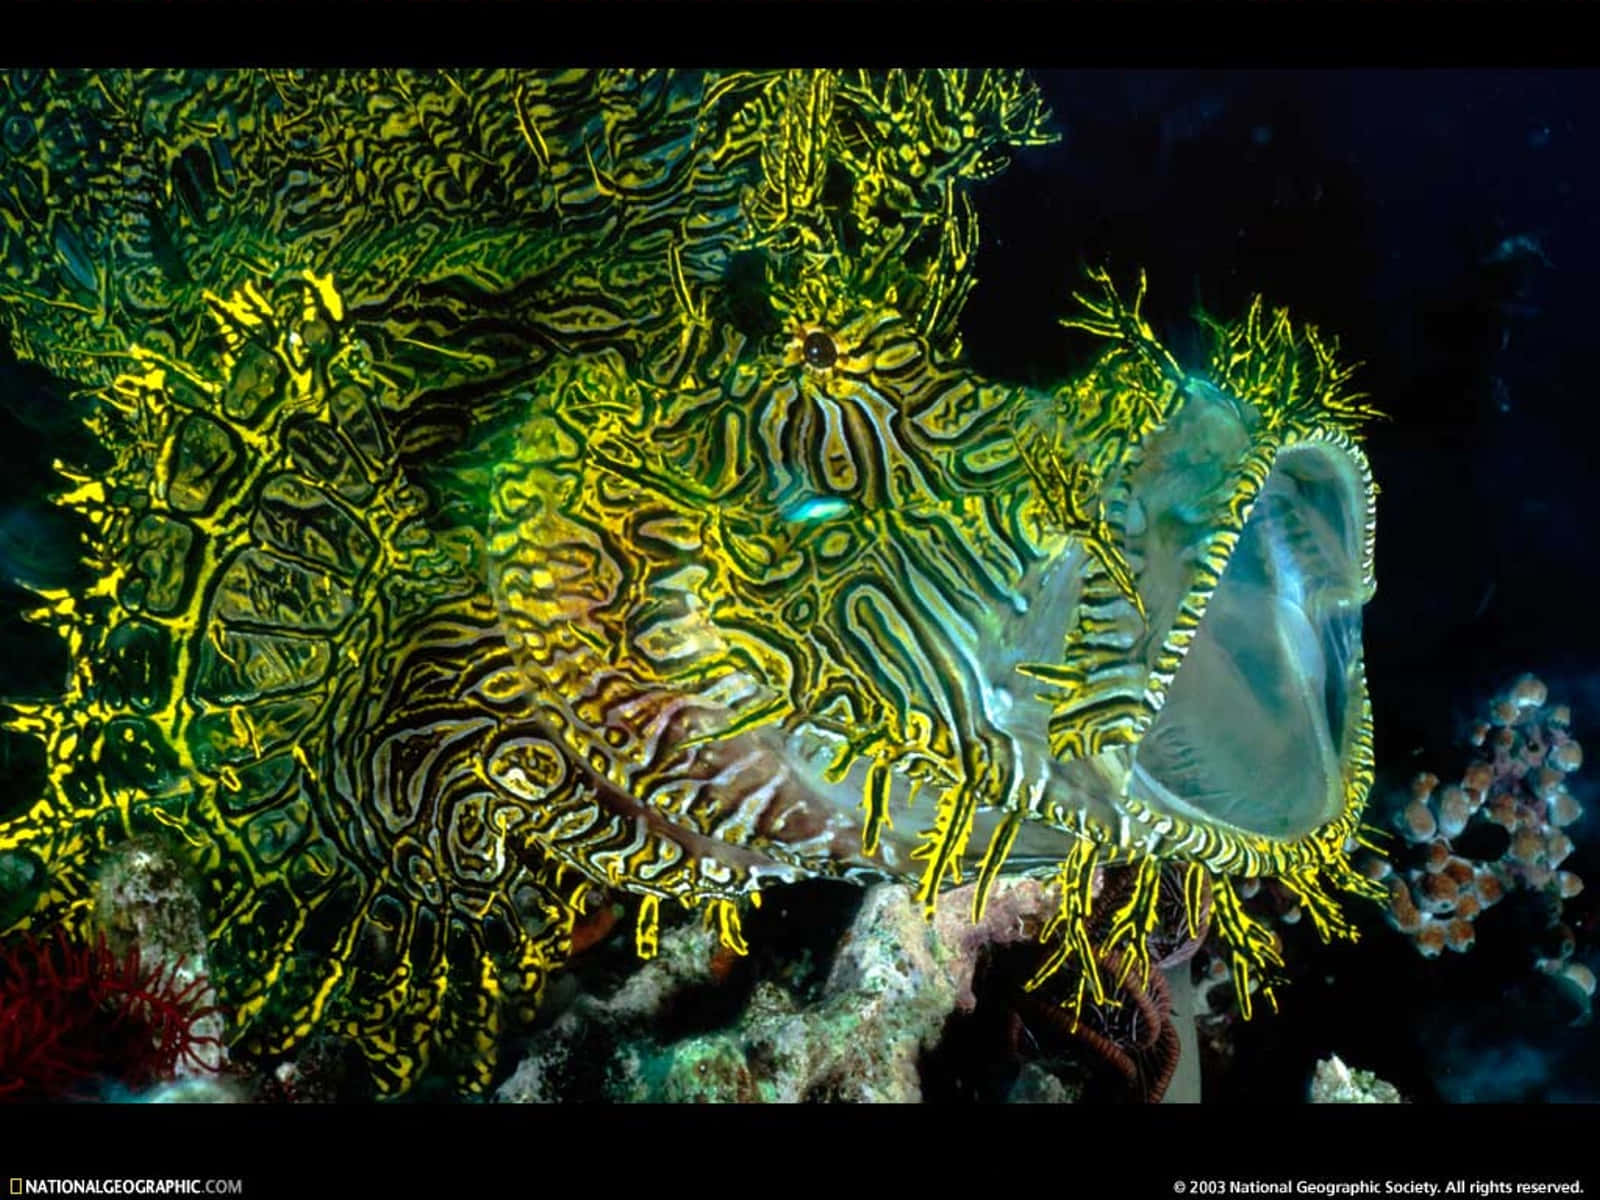 Caption: A vibrant 3D fish exploring underwater coral reefs. Wallpaper